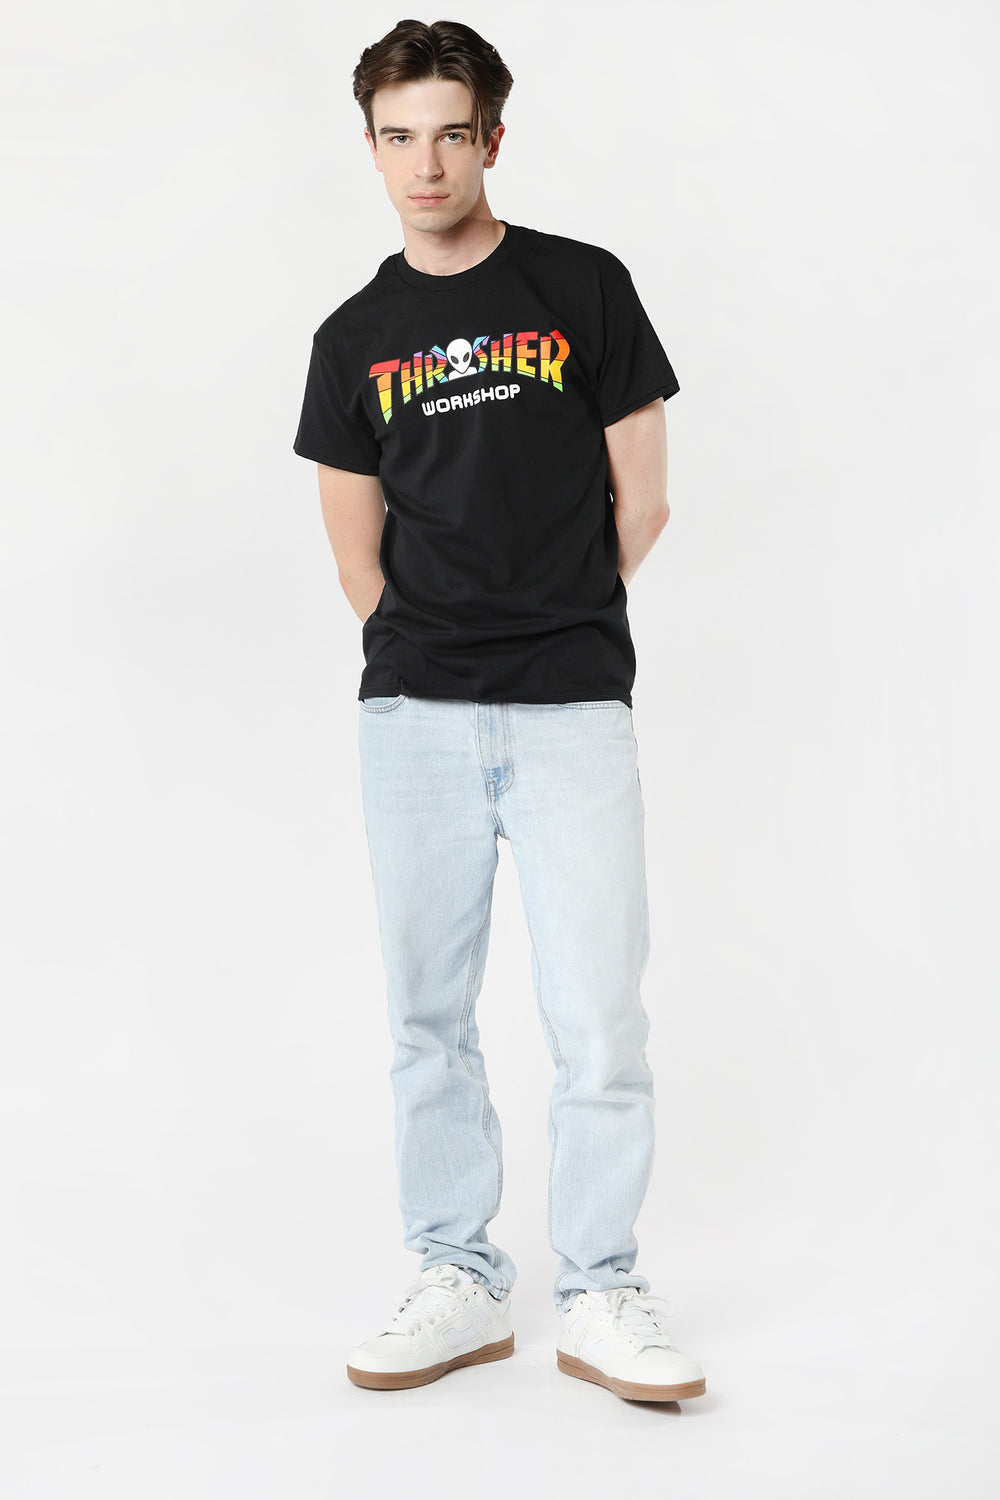 Thrasher x Alien Workshop Spectrum T-Shirt Black